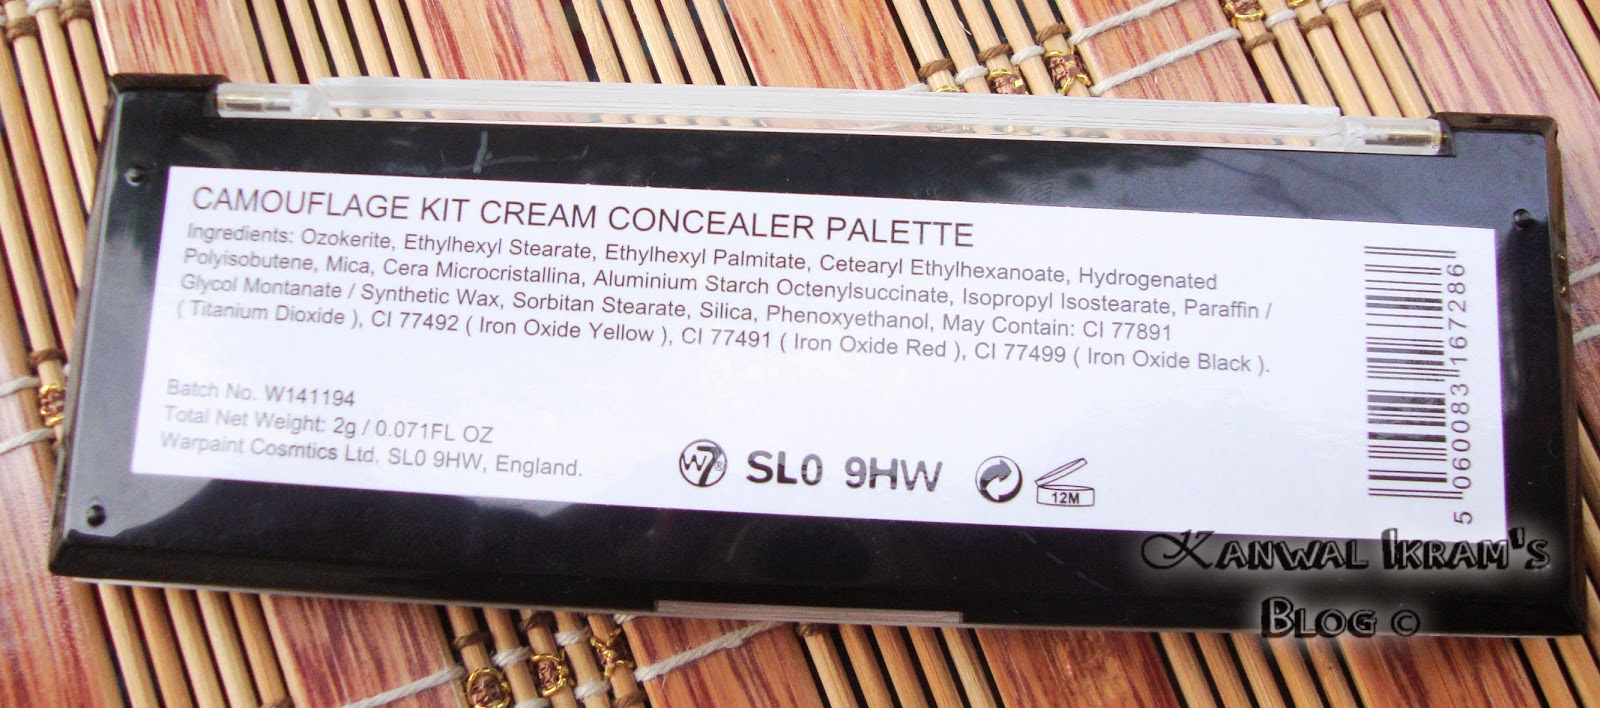 Genoptag afslappet bremse Kanwal Ikram's Blog: W7 Camouflage Kit Cream Concealer Pallet- Review And  Swatches